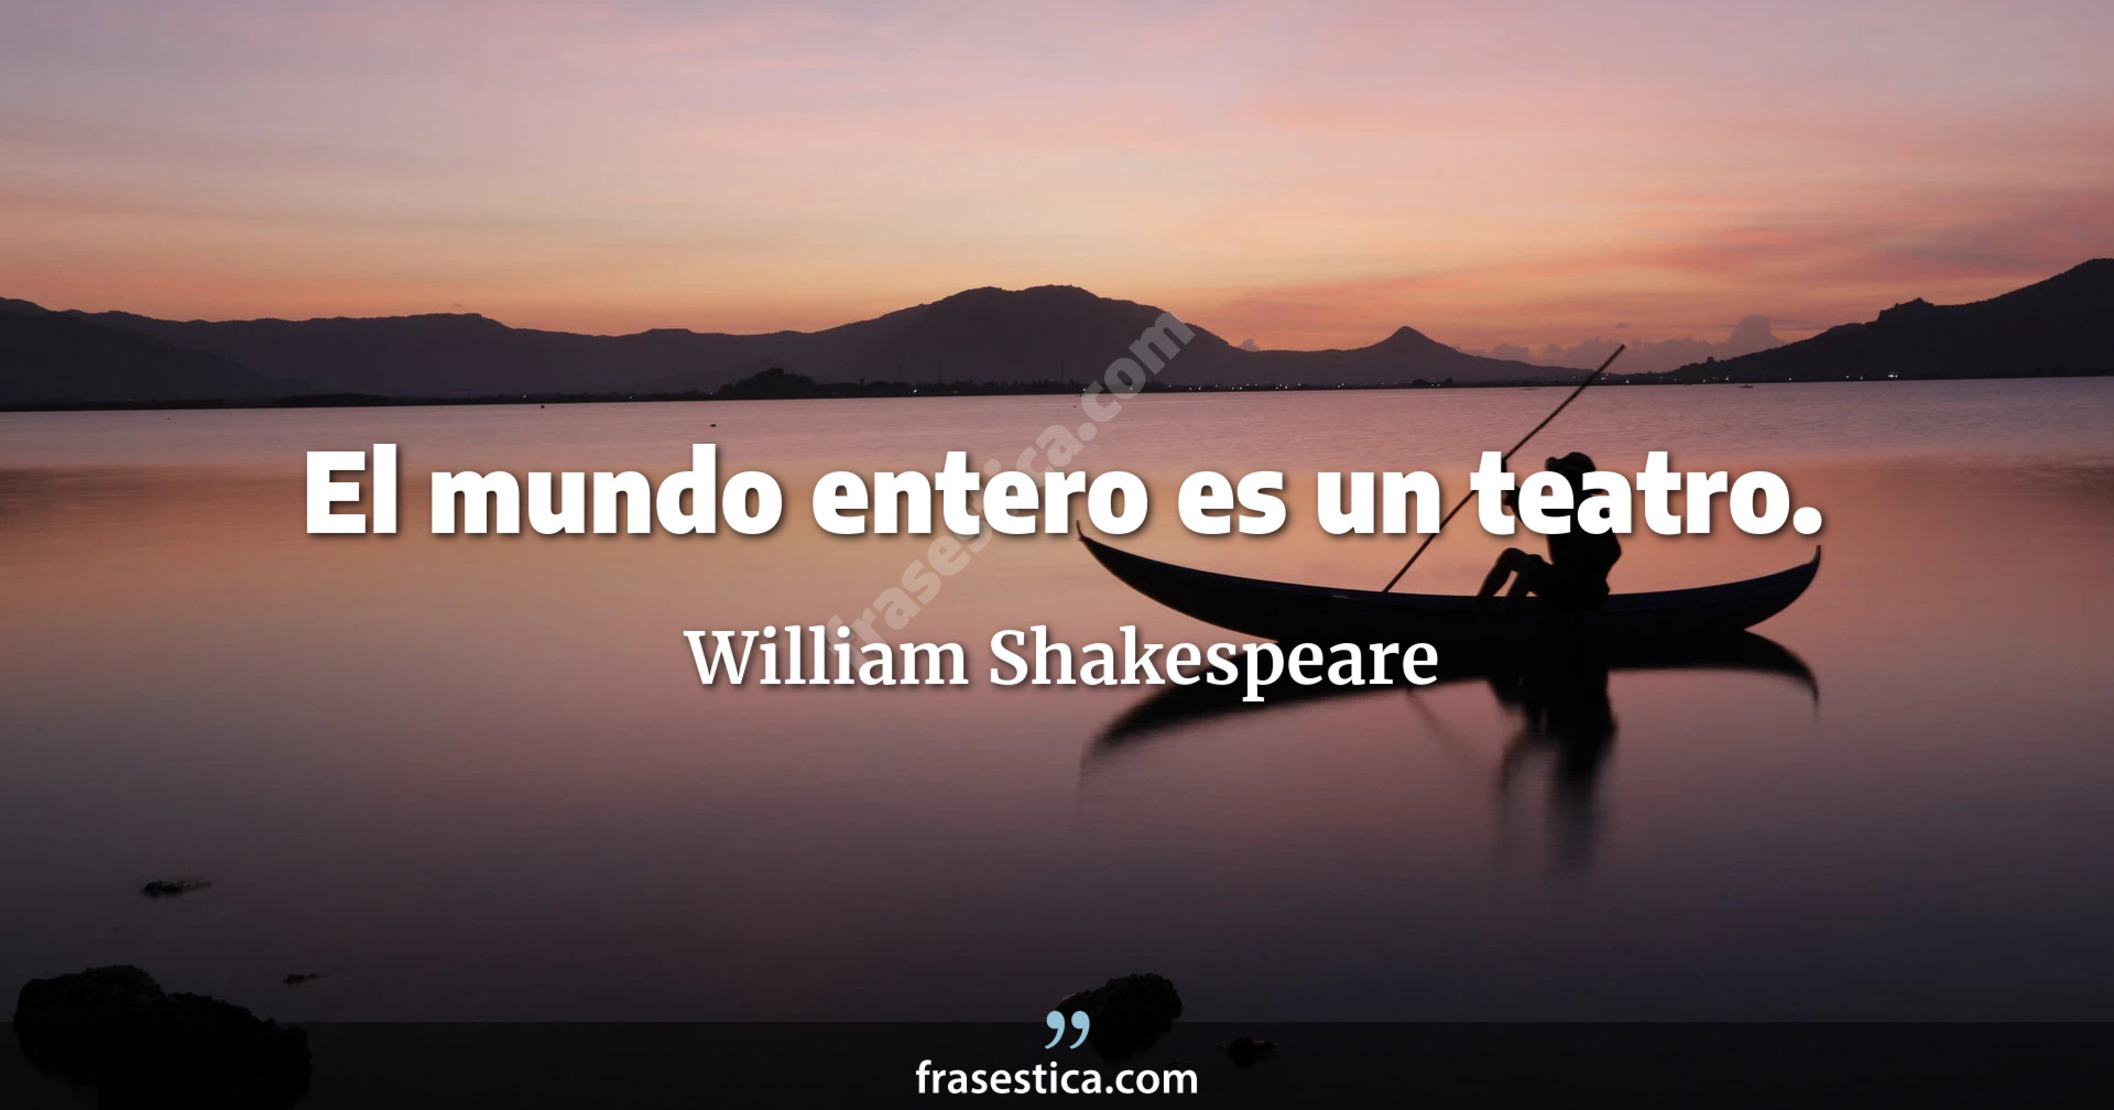 El mundo entero es un teatro. - William Shakespeare